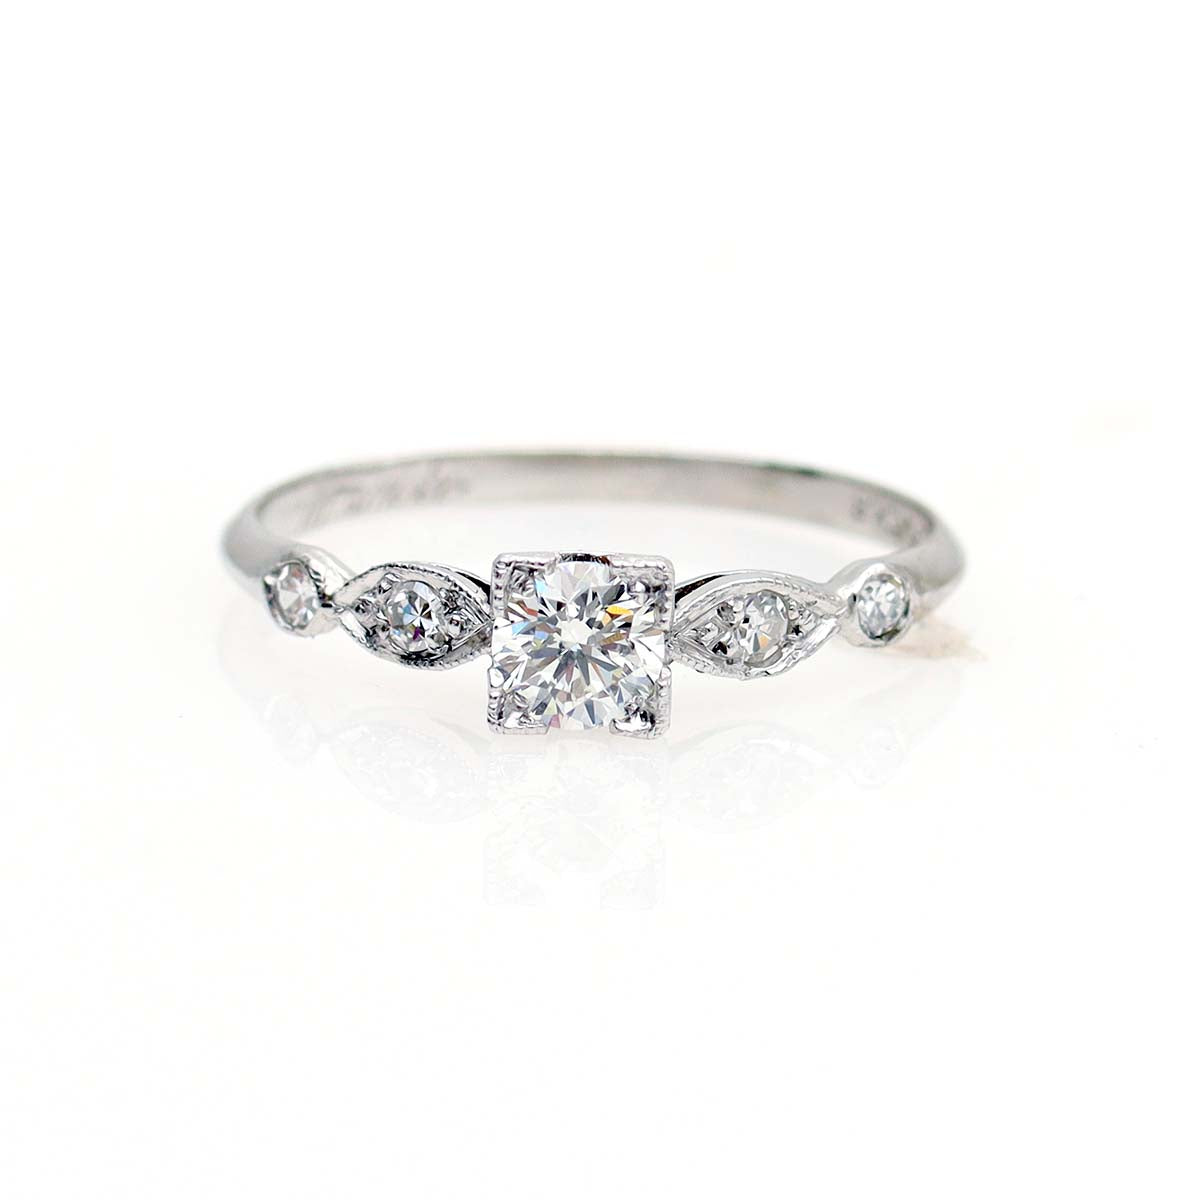 Vintage 1930s Engagement Ring #VR220714-6